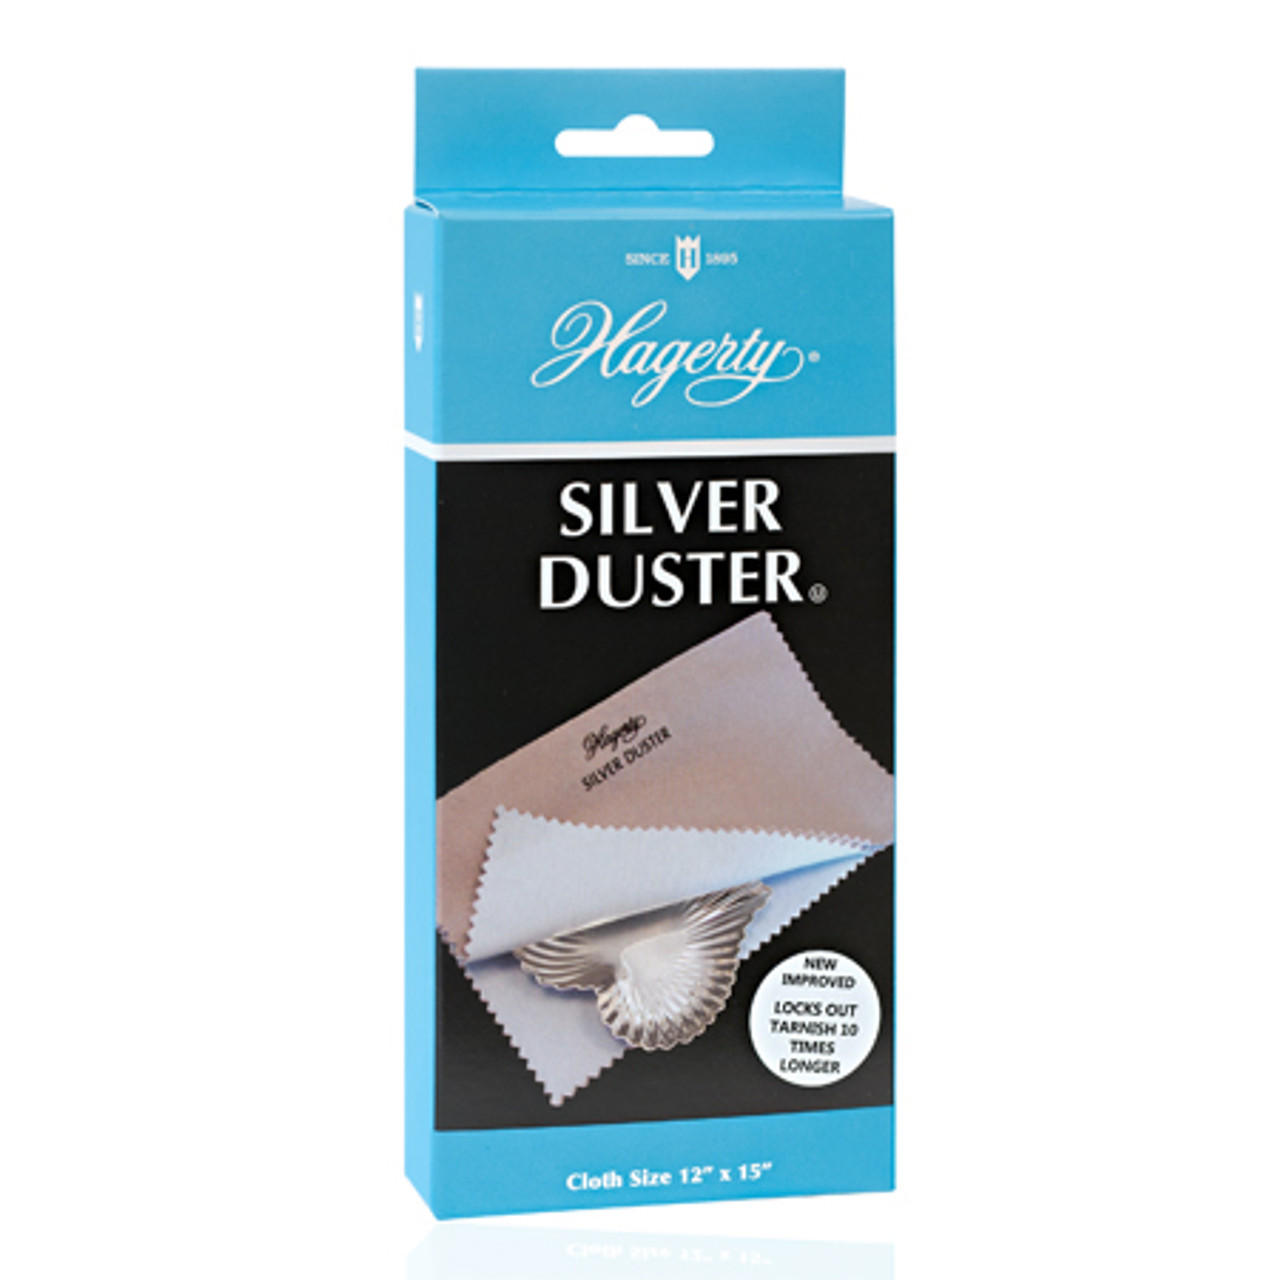 Hagerty Silver Cloth